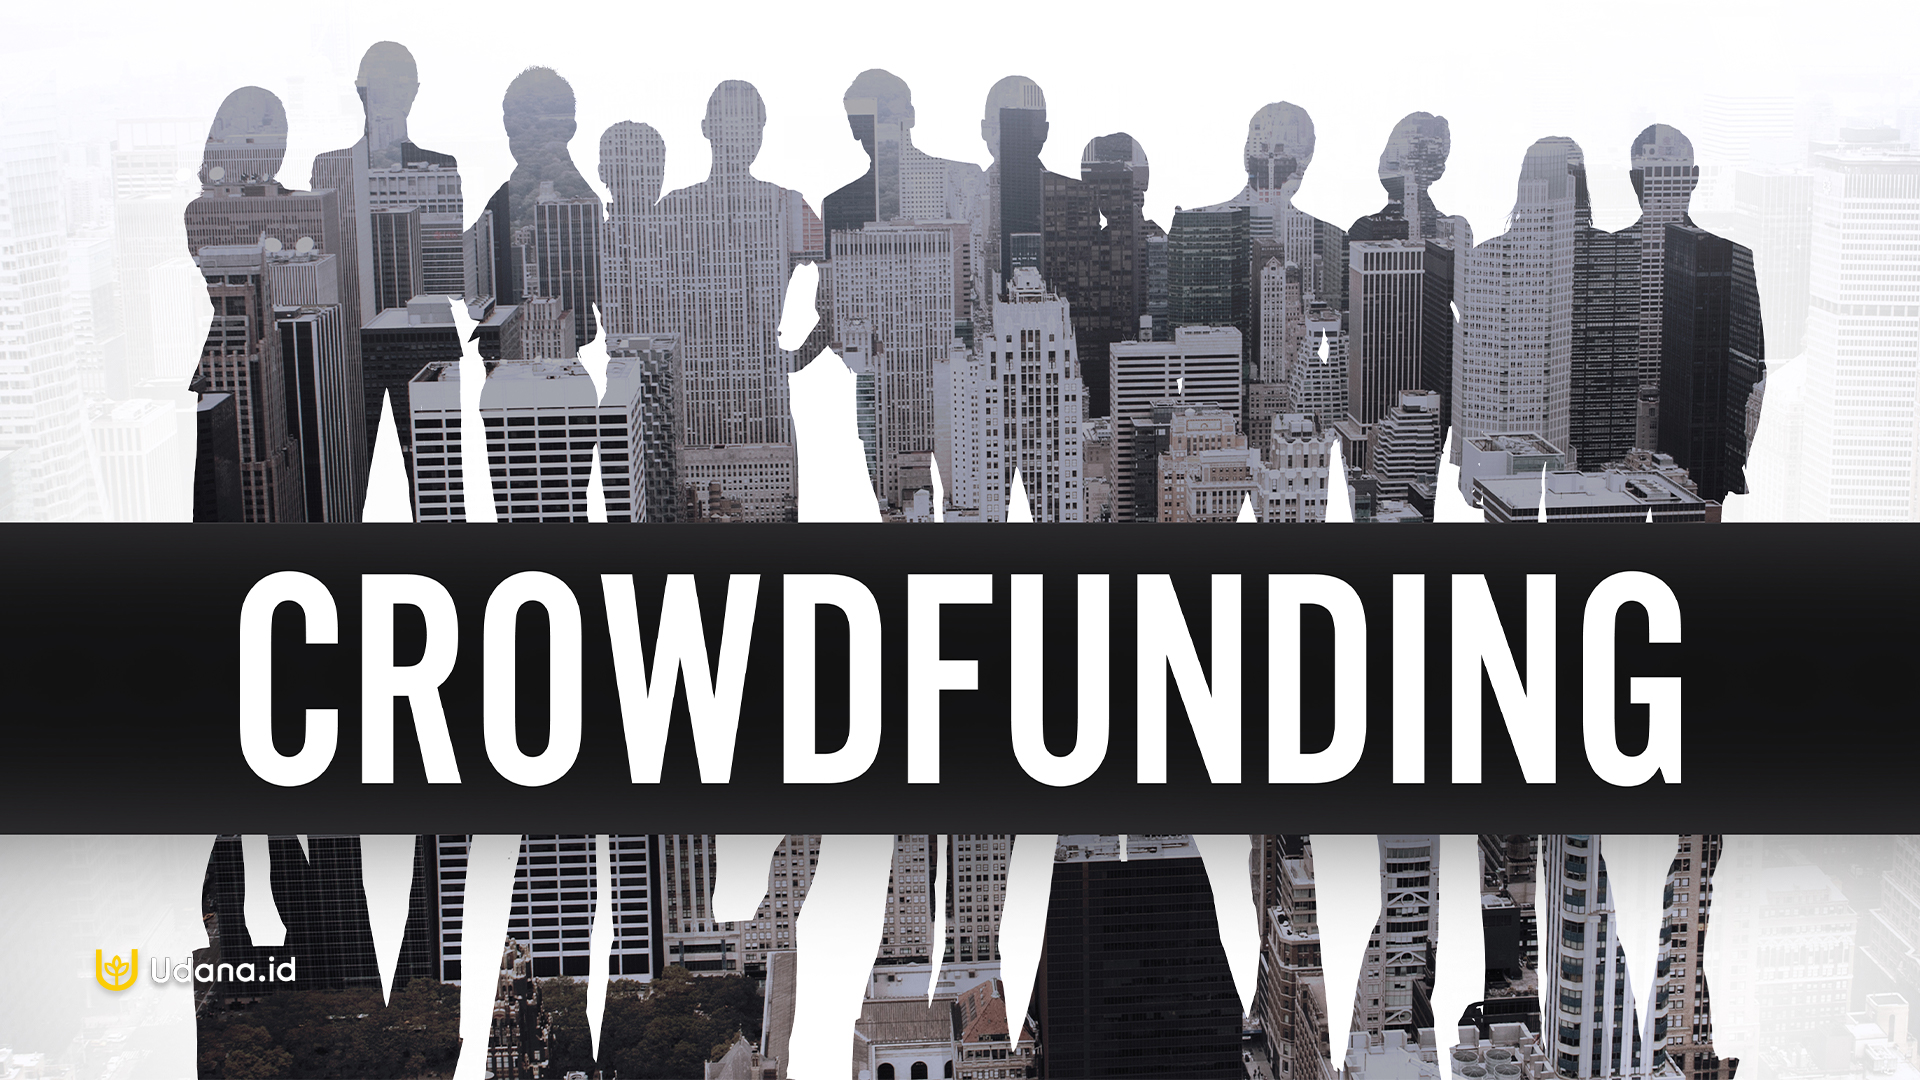 manfaat equity crowdfunding bagi umkm